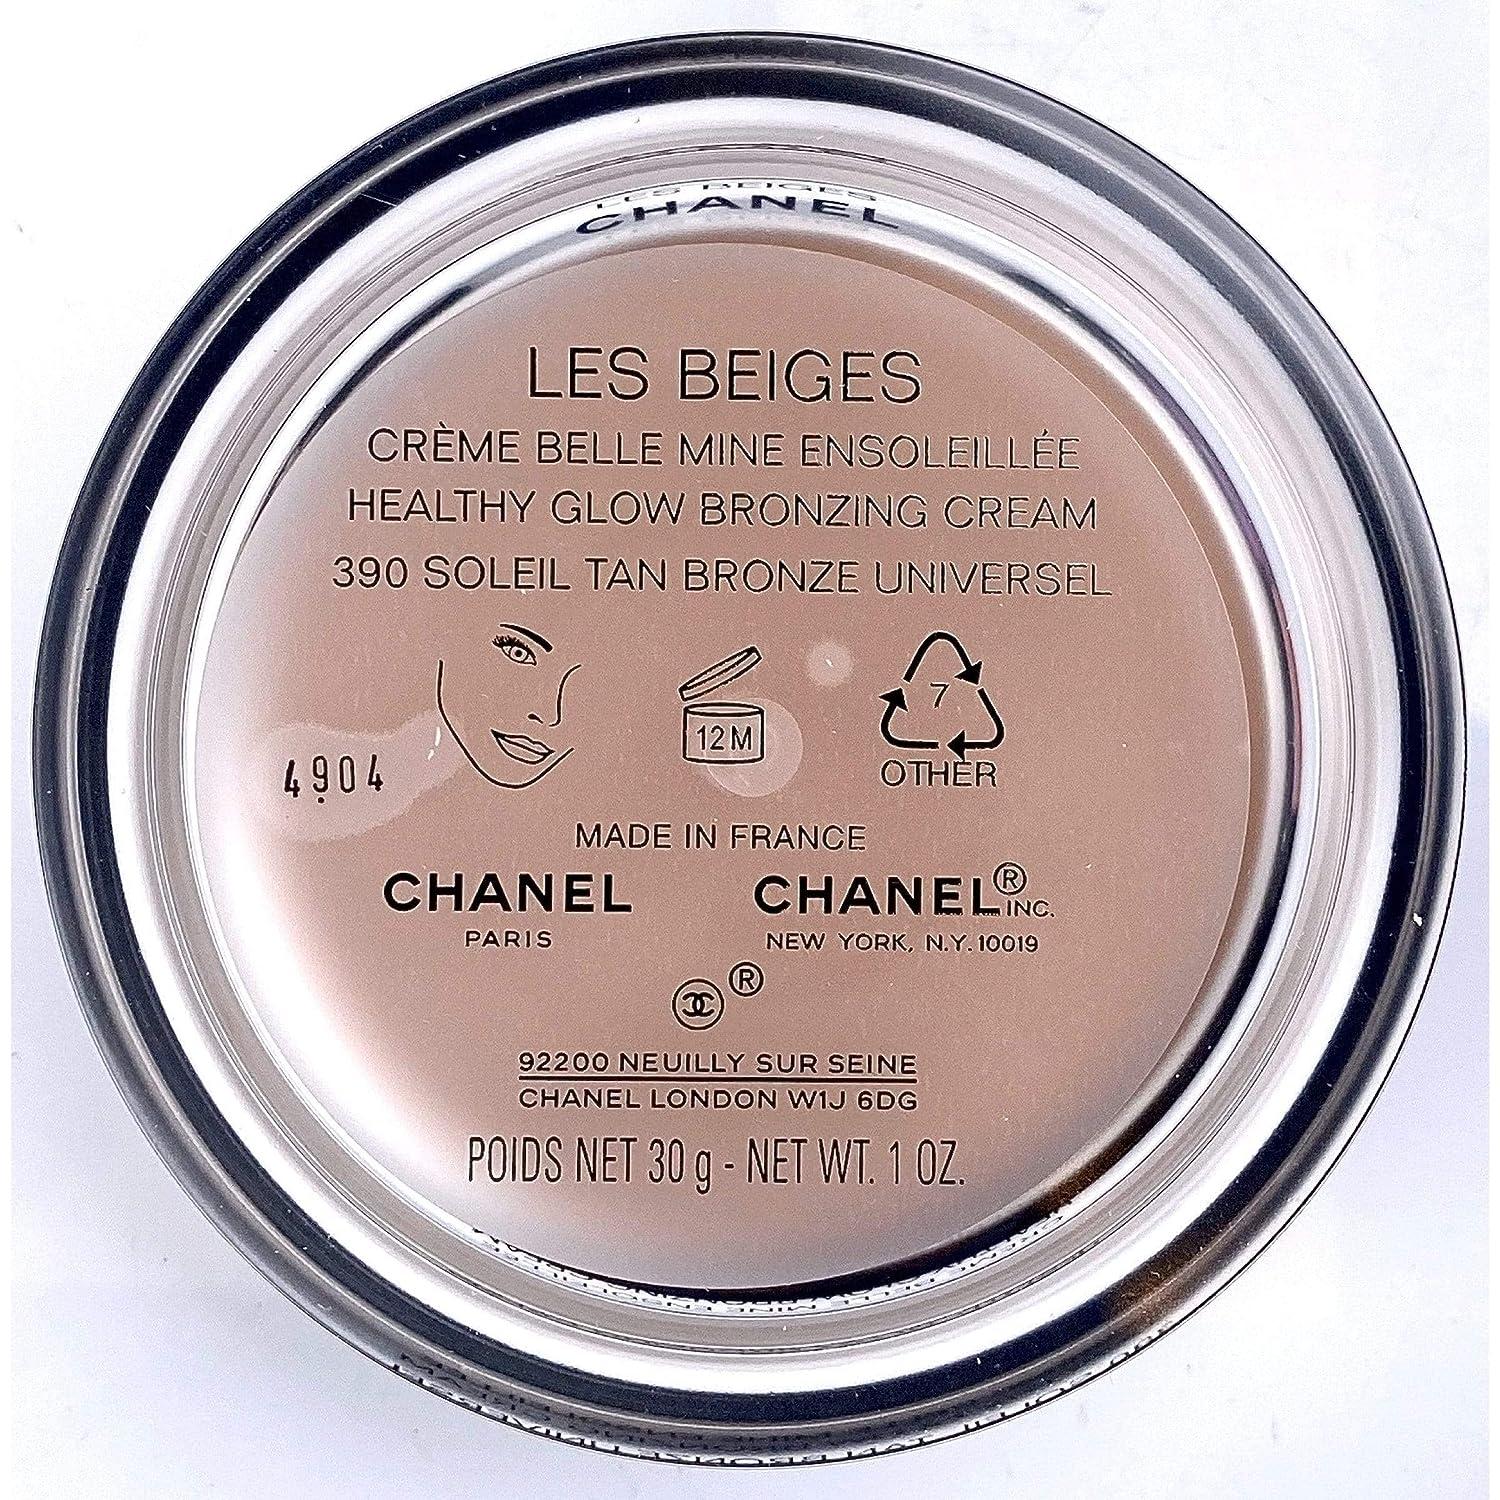 HEALTHY GLOW BRONZING CREAM Cream-gel bronzer for a healthy, sun-kissed  glow 390 - Soleil tan bronze | CHANEL